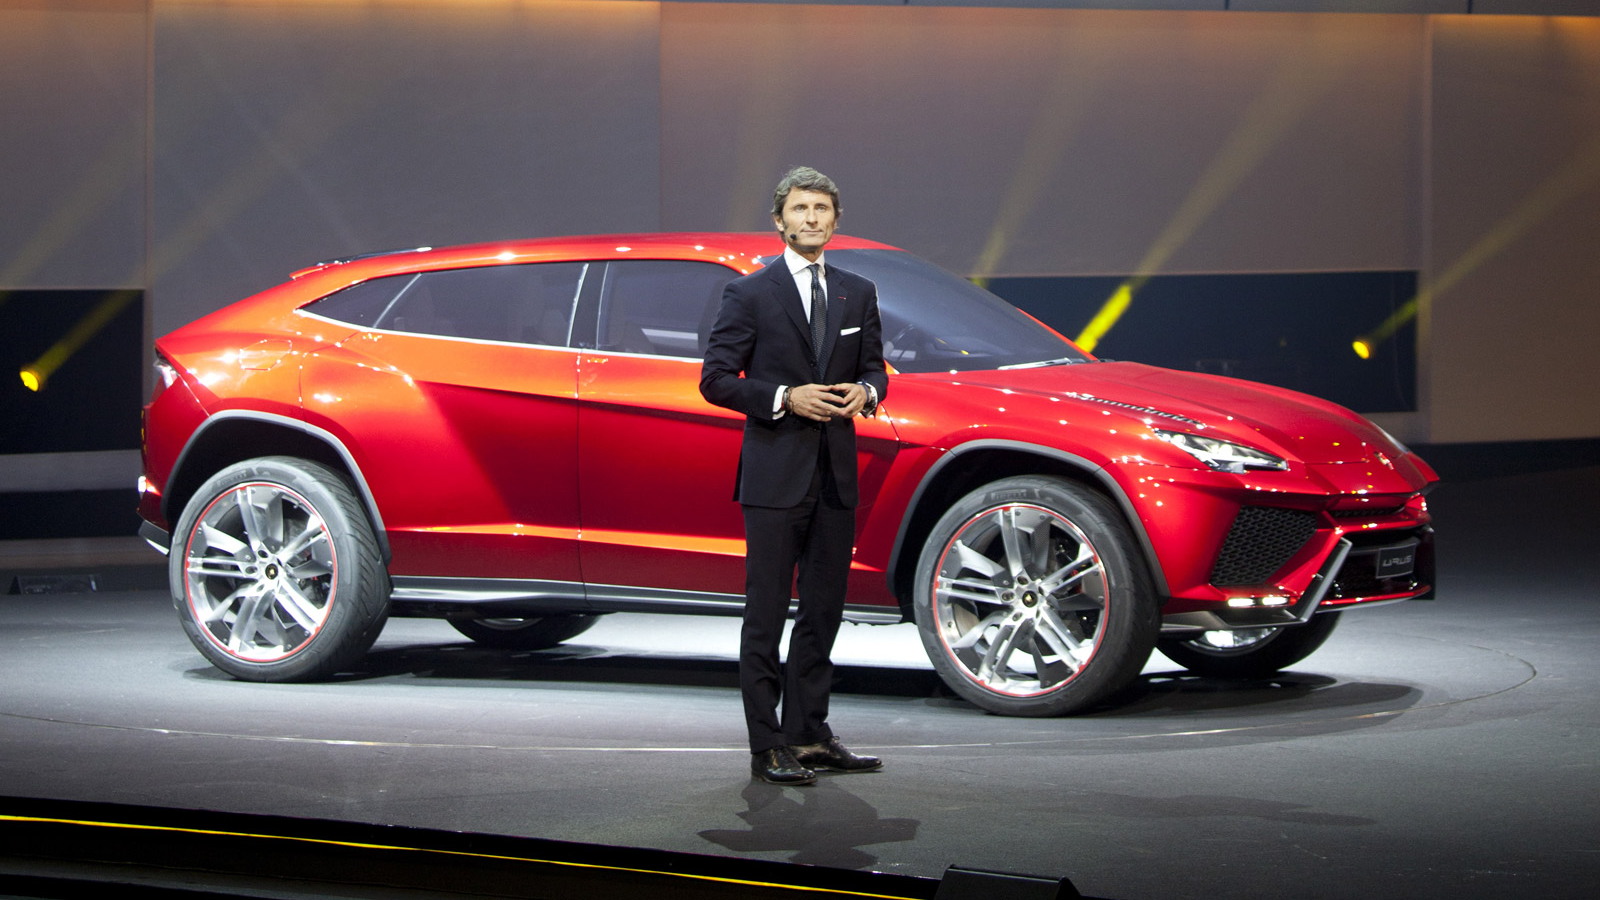 Lamborghini CEO Stephan Winkelmann and the 2012 Urus SUV concept